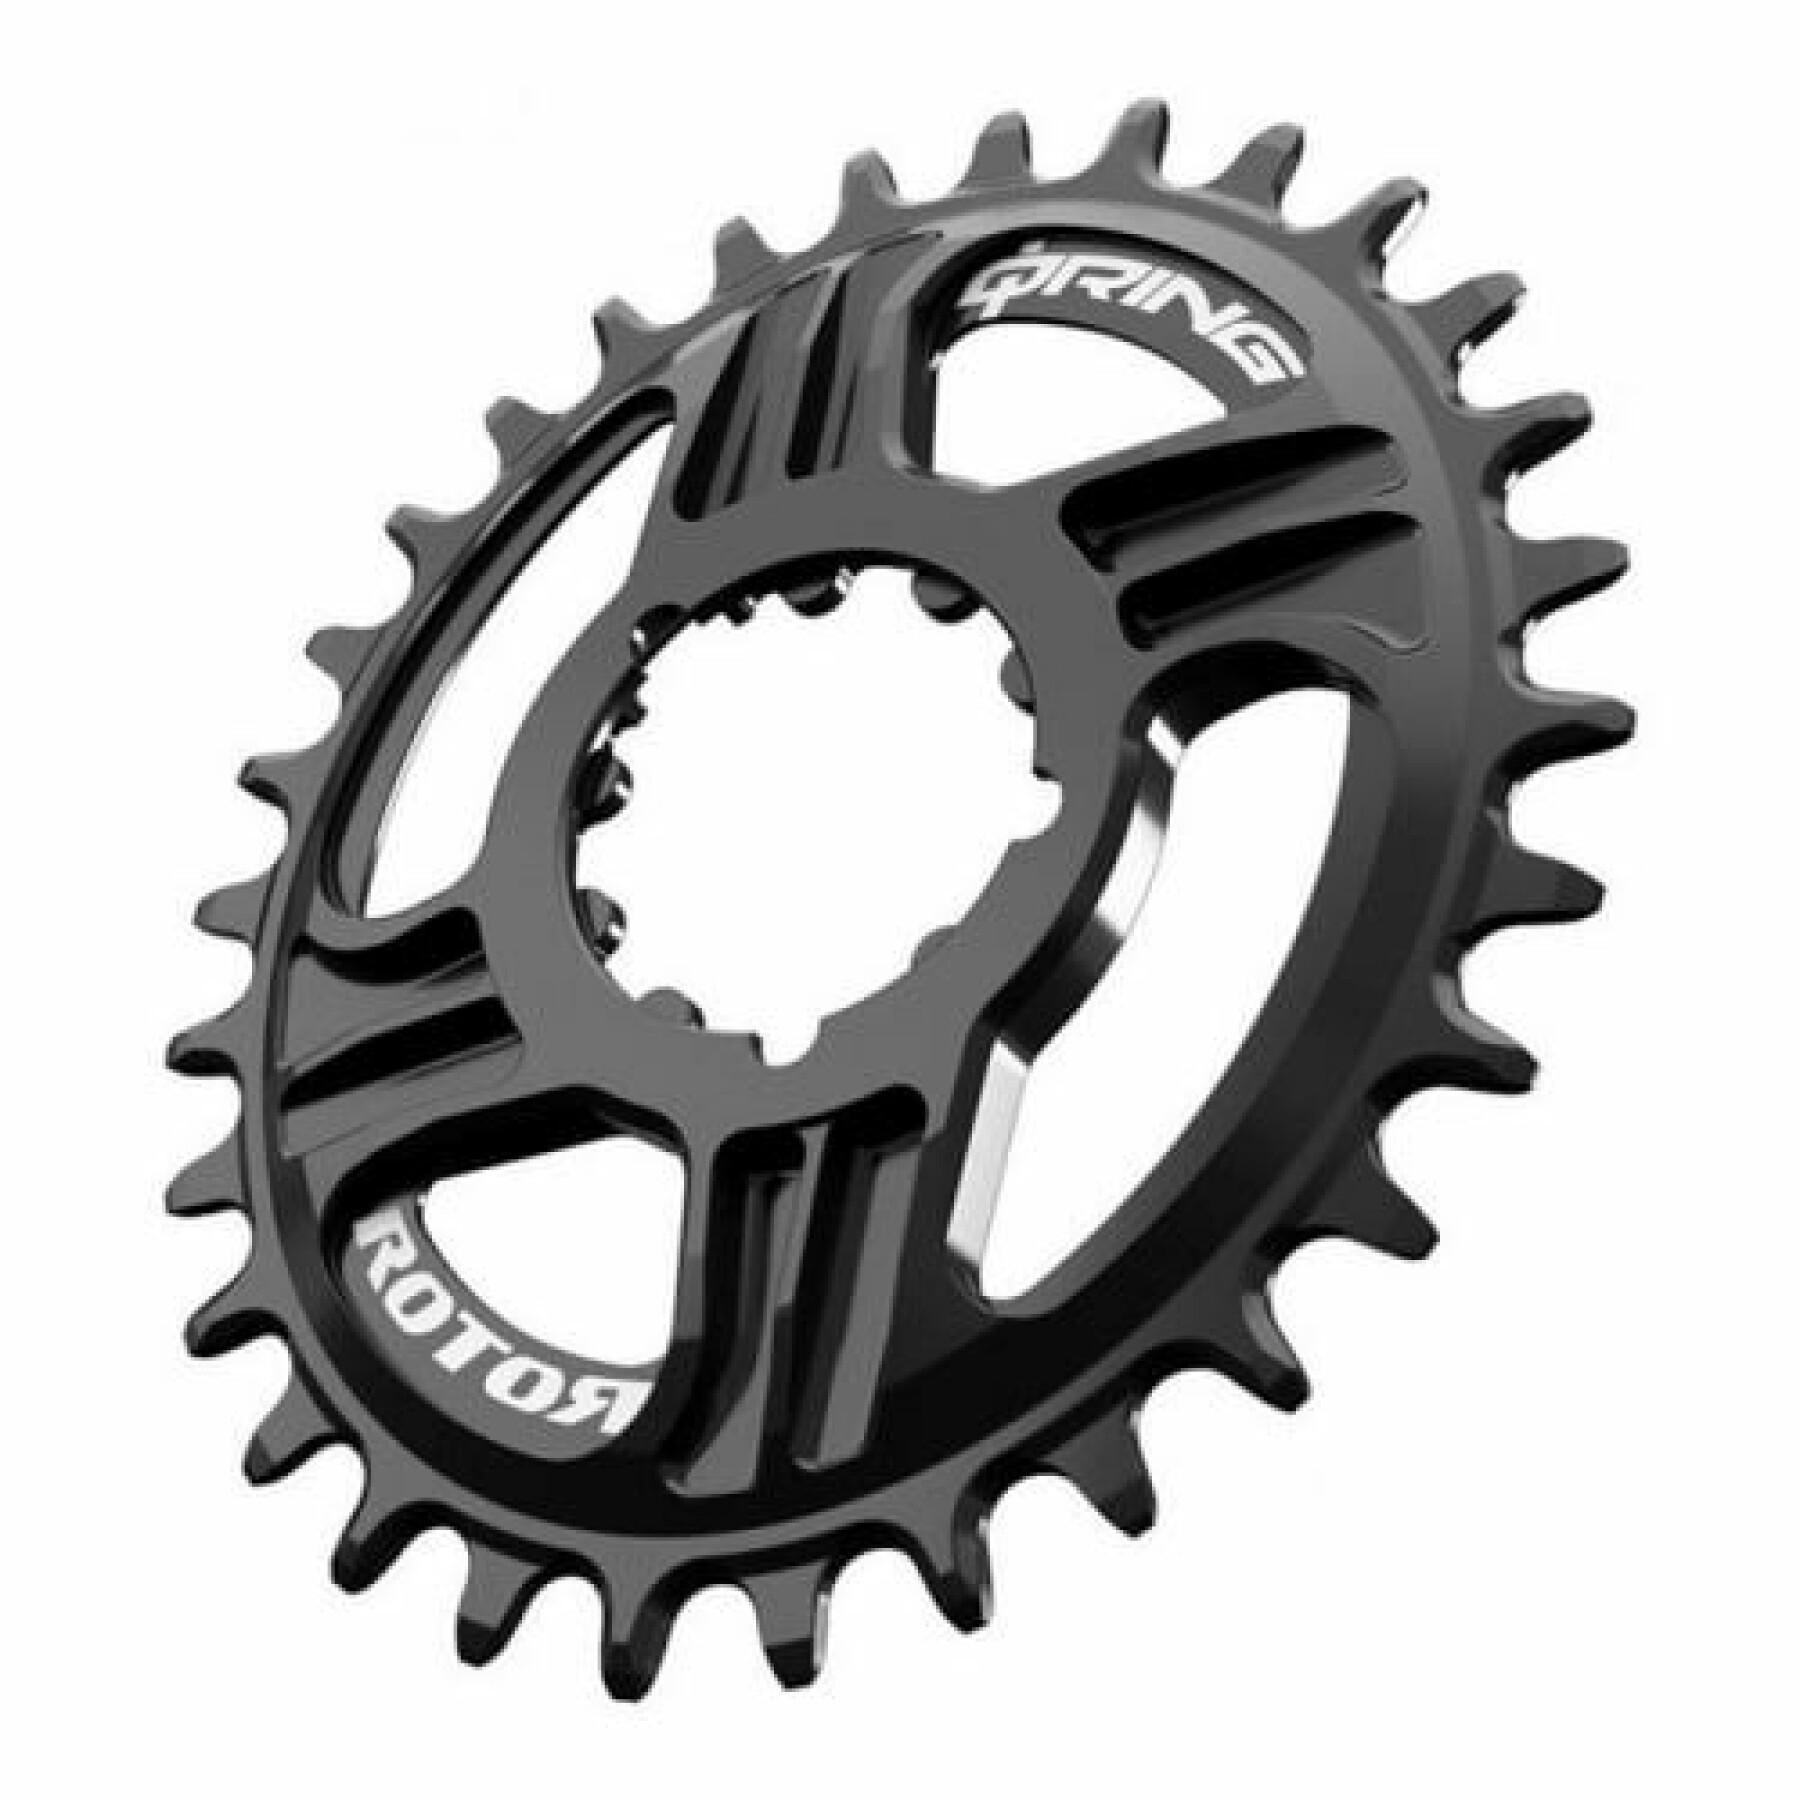 Mono lade Rotor Q Rings dm sram boost 3 mm Kettingbladen - Transmissie - Mountainbiken